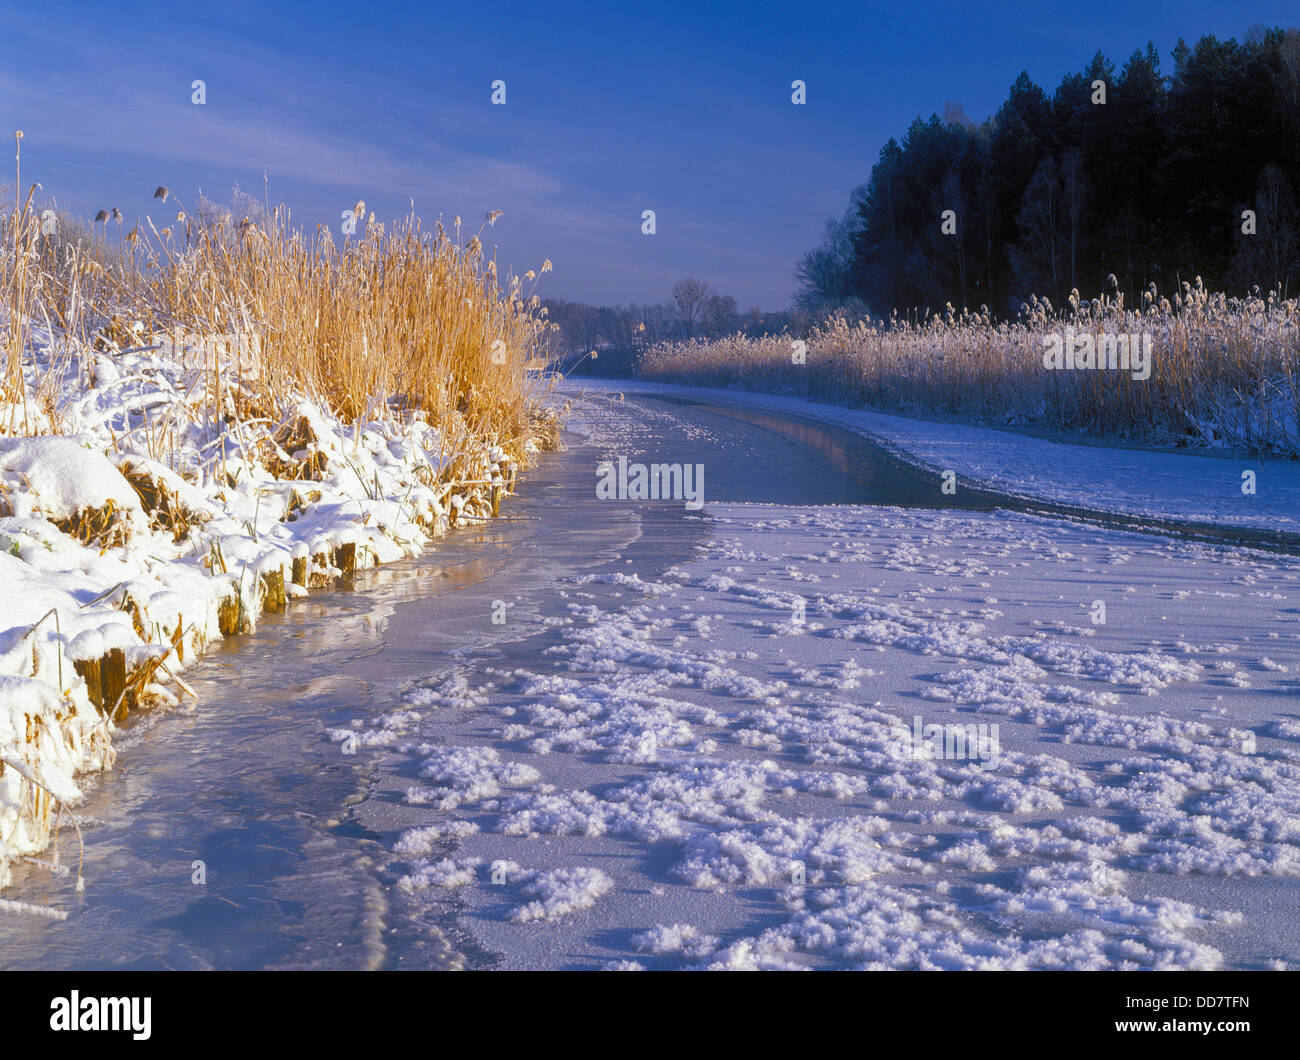 Lyna Fluss, Ermland ich Masuren, Polen Stockfoto